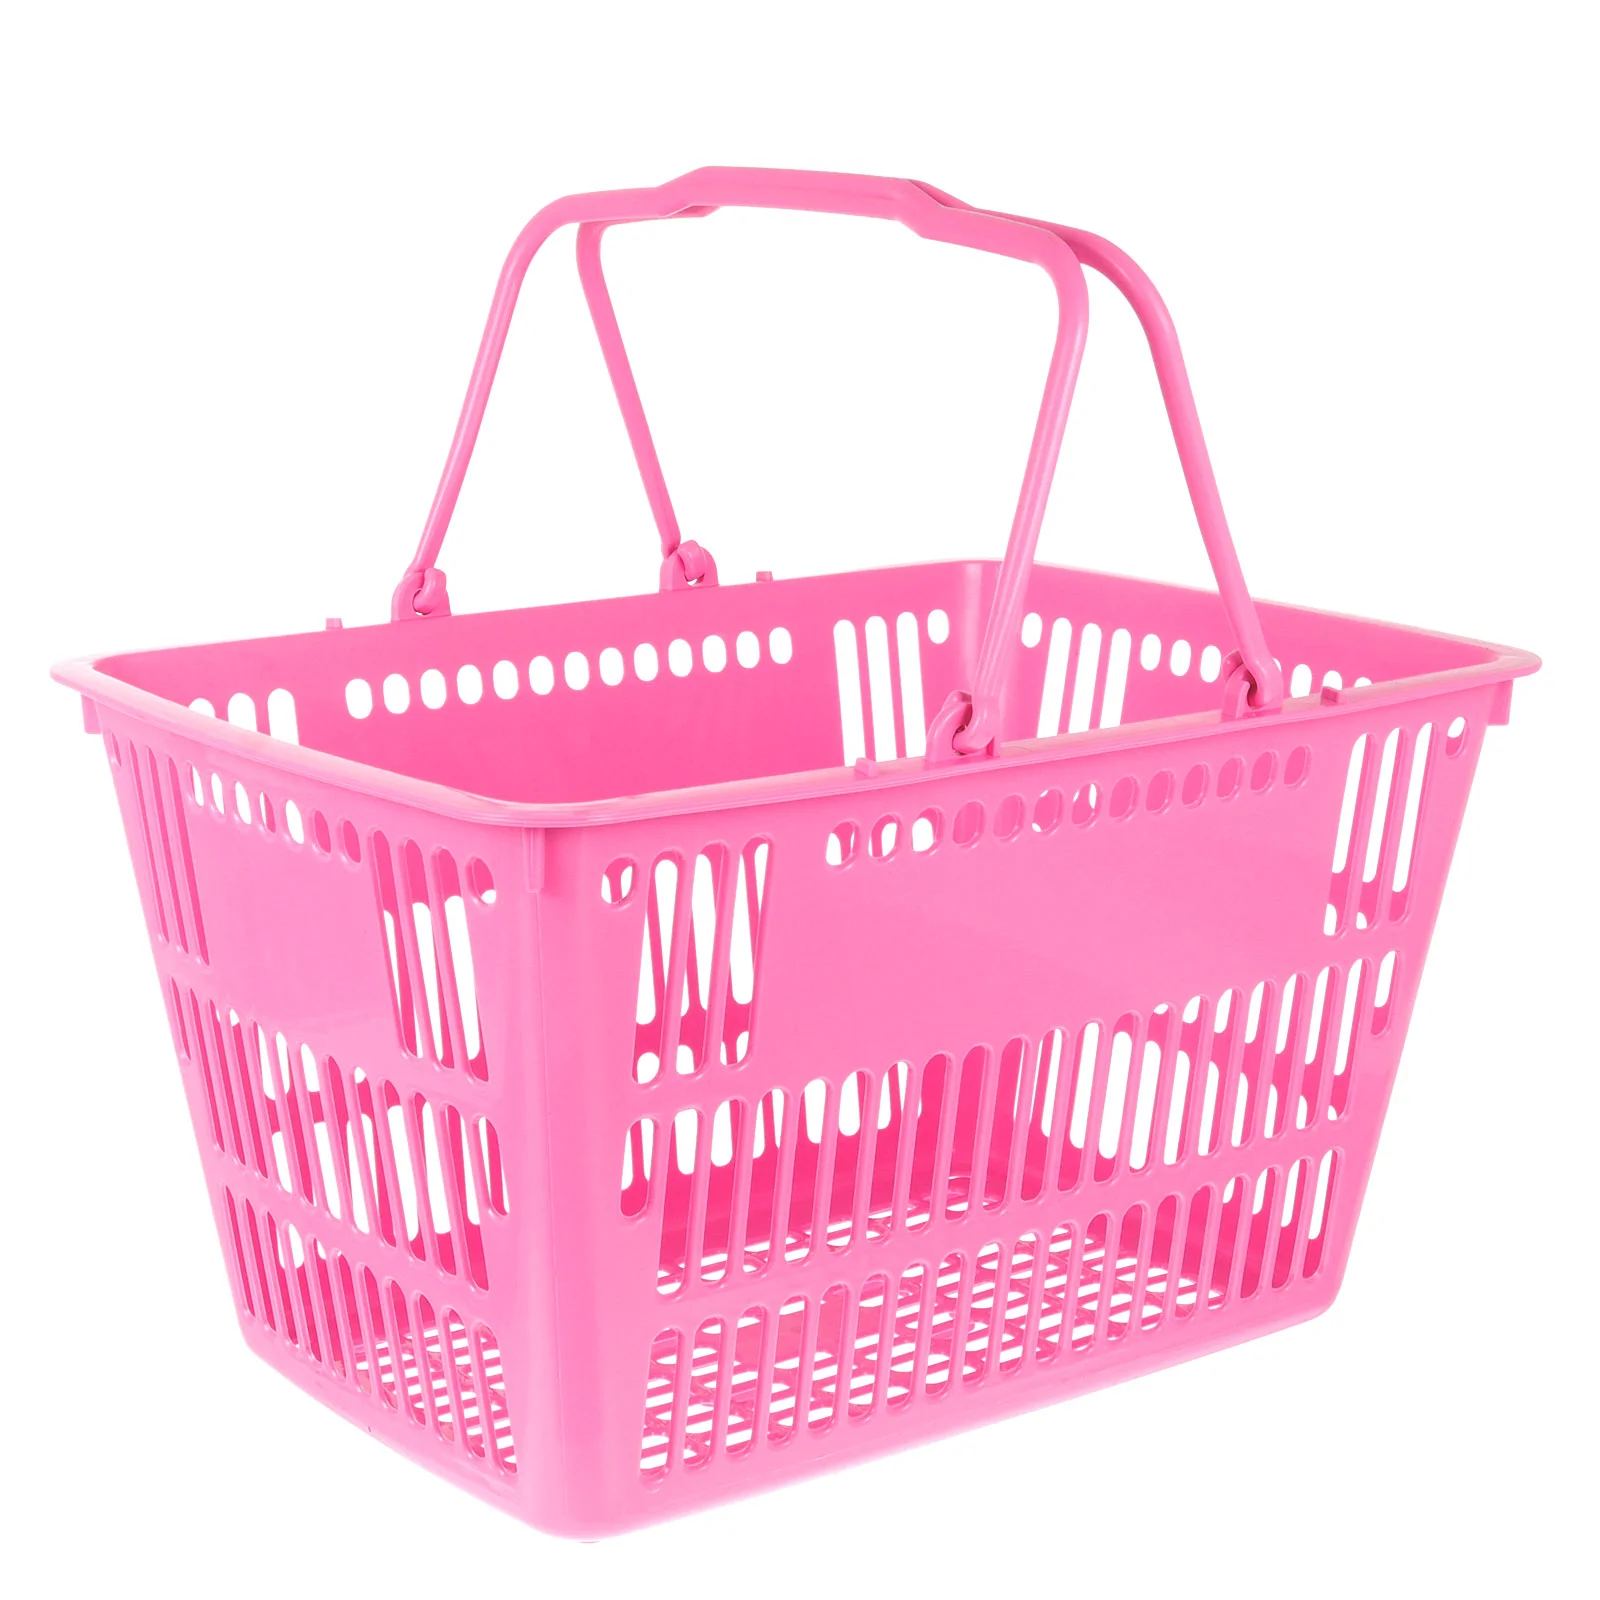 

Basket Shopping Baskets Storage Grocery Handles Plastic Kids Mall Organizing Cart Retail Supermarket Store Sundries Vegetable